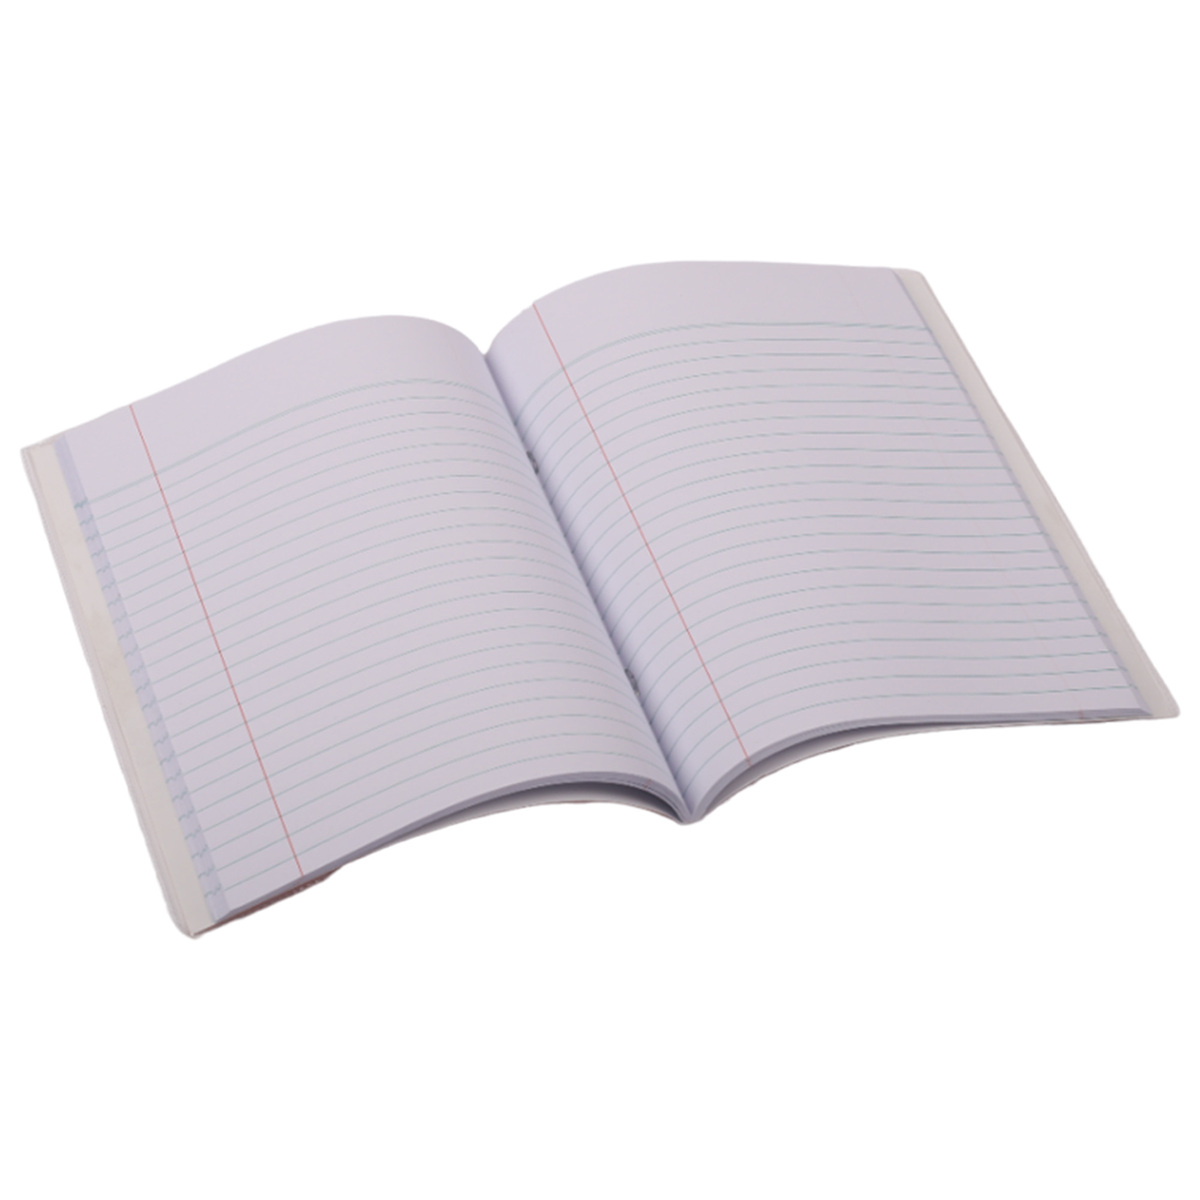 Sadaf Notebook Brown Cover Single Line 60 Sheets